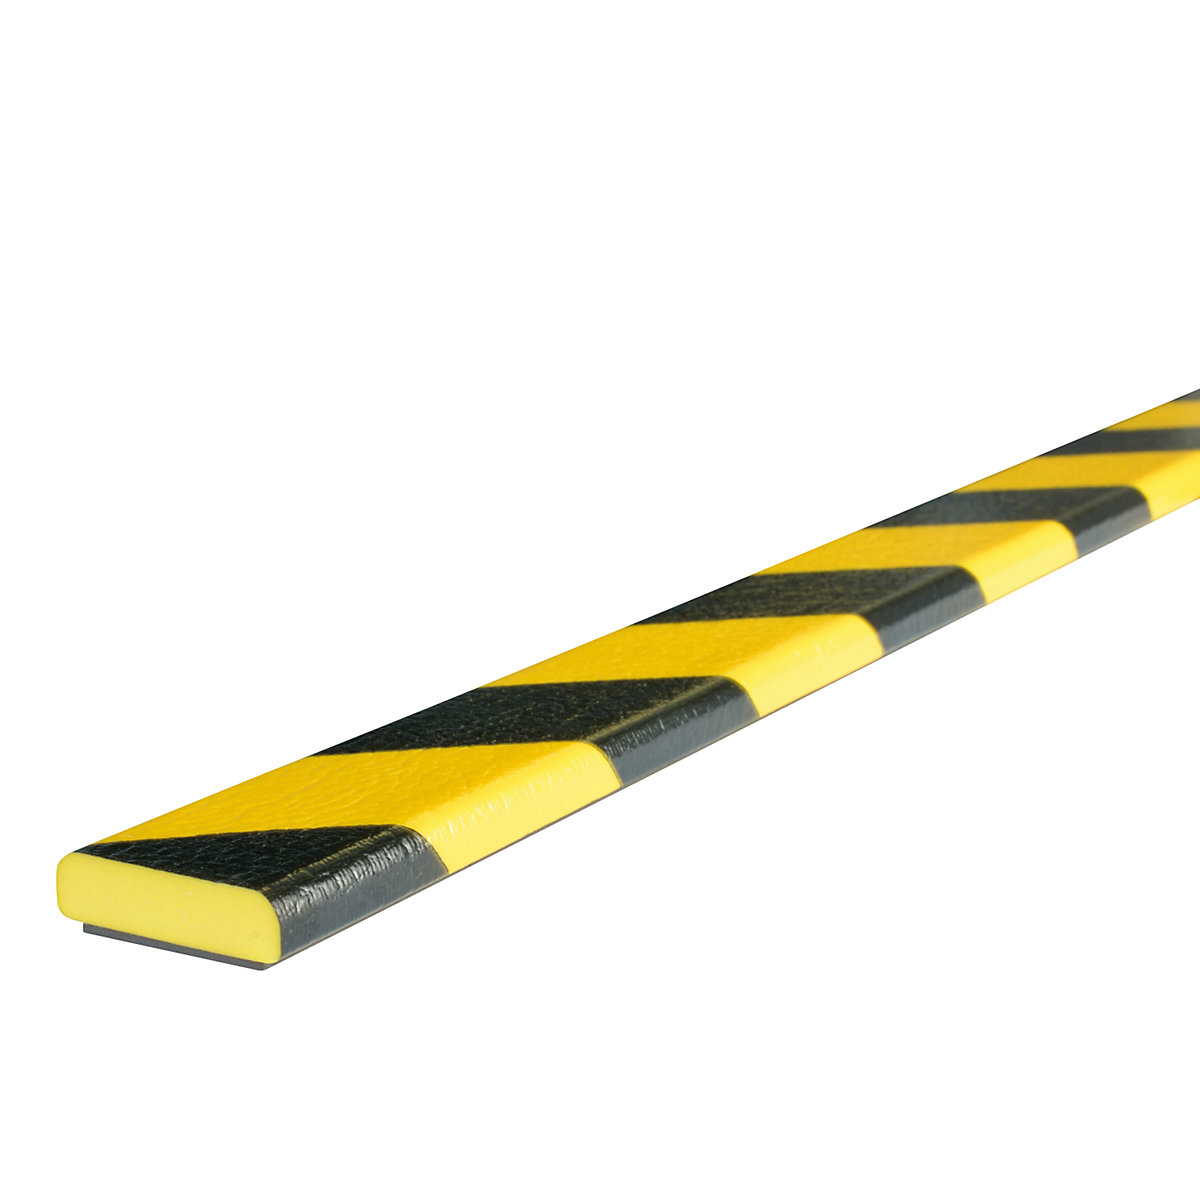 Knuffi®-oppervlaktebescherming – SHG, type F, stuk van 1 m, zwart/geel, magneethoudend-22